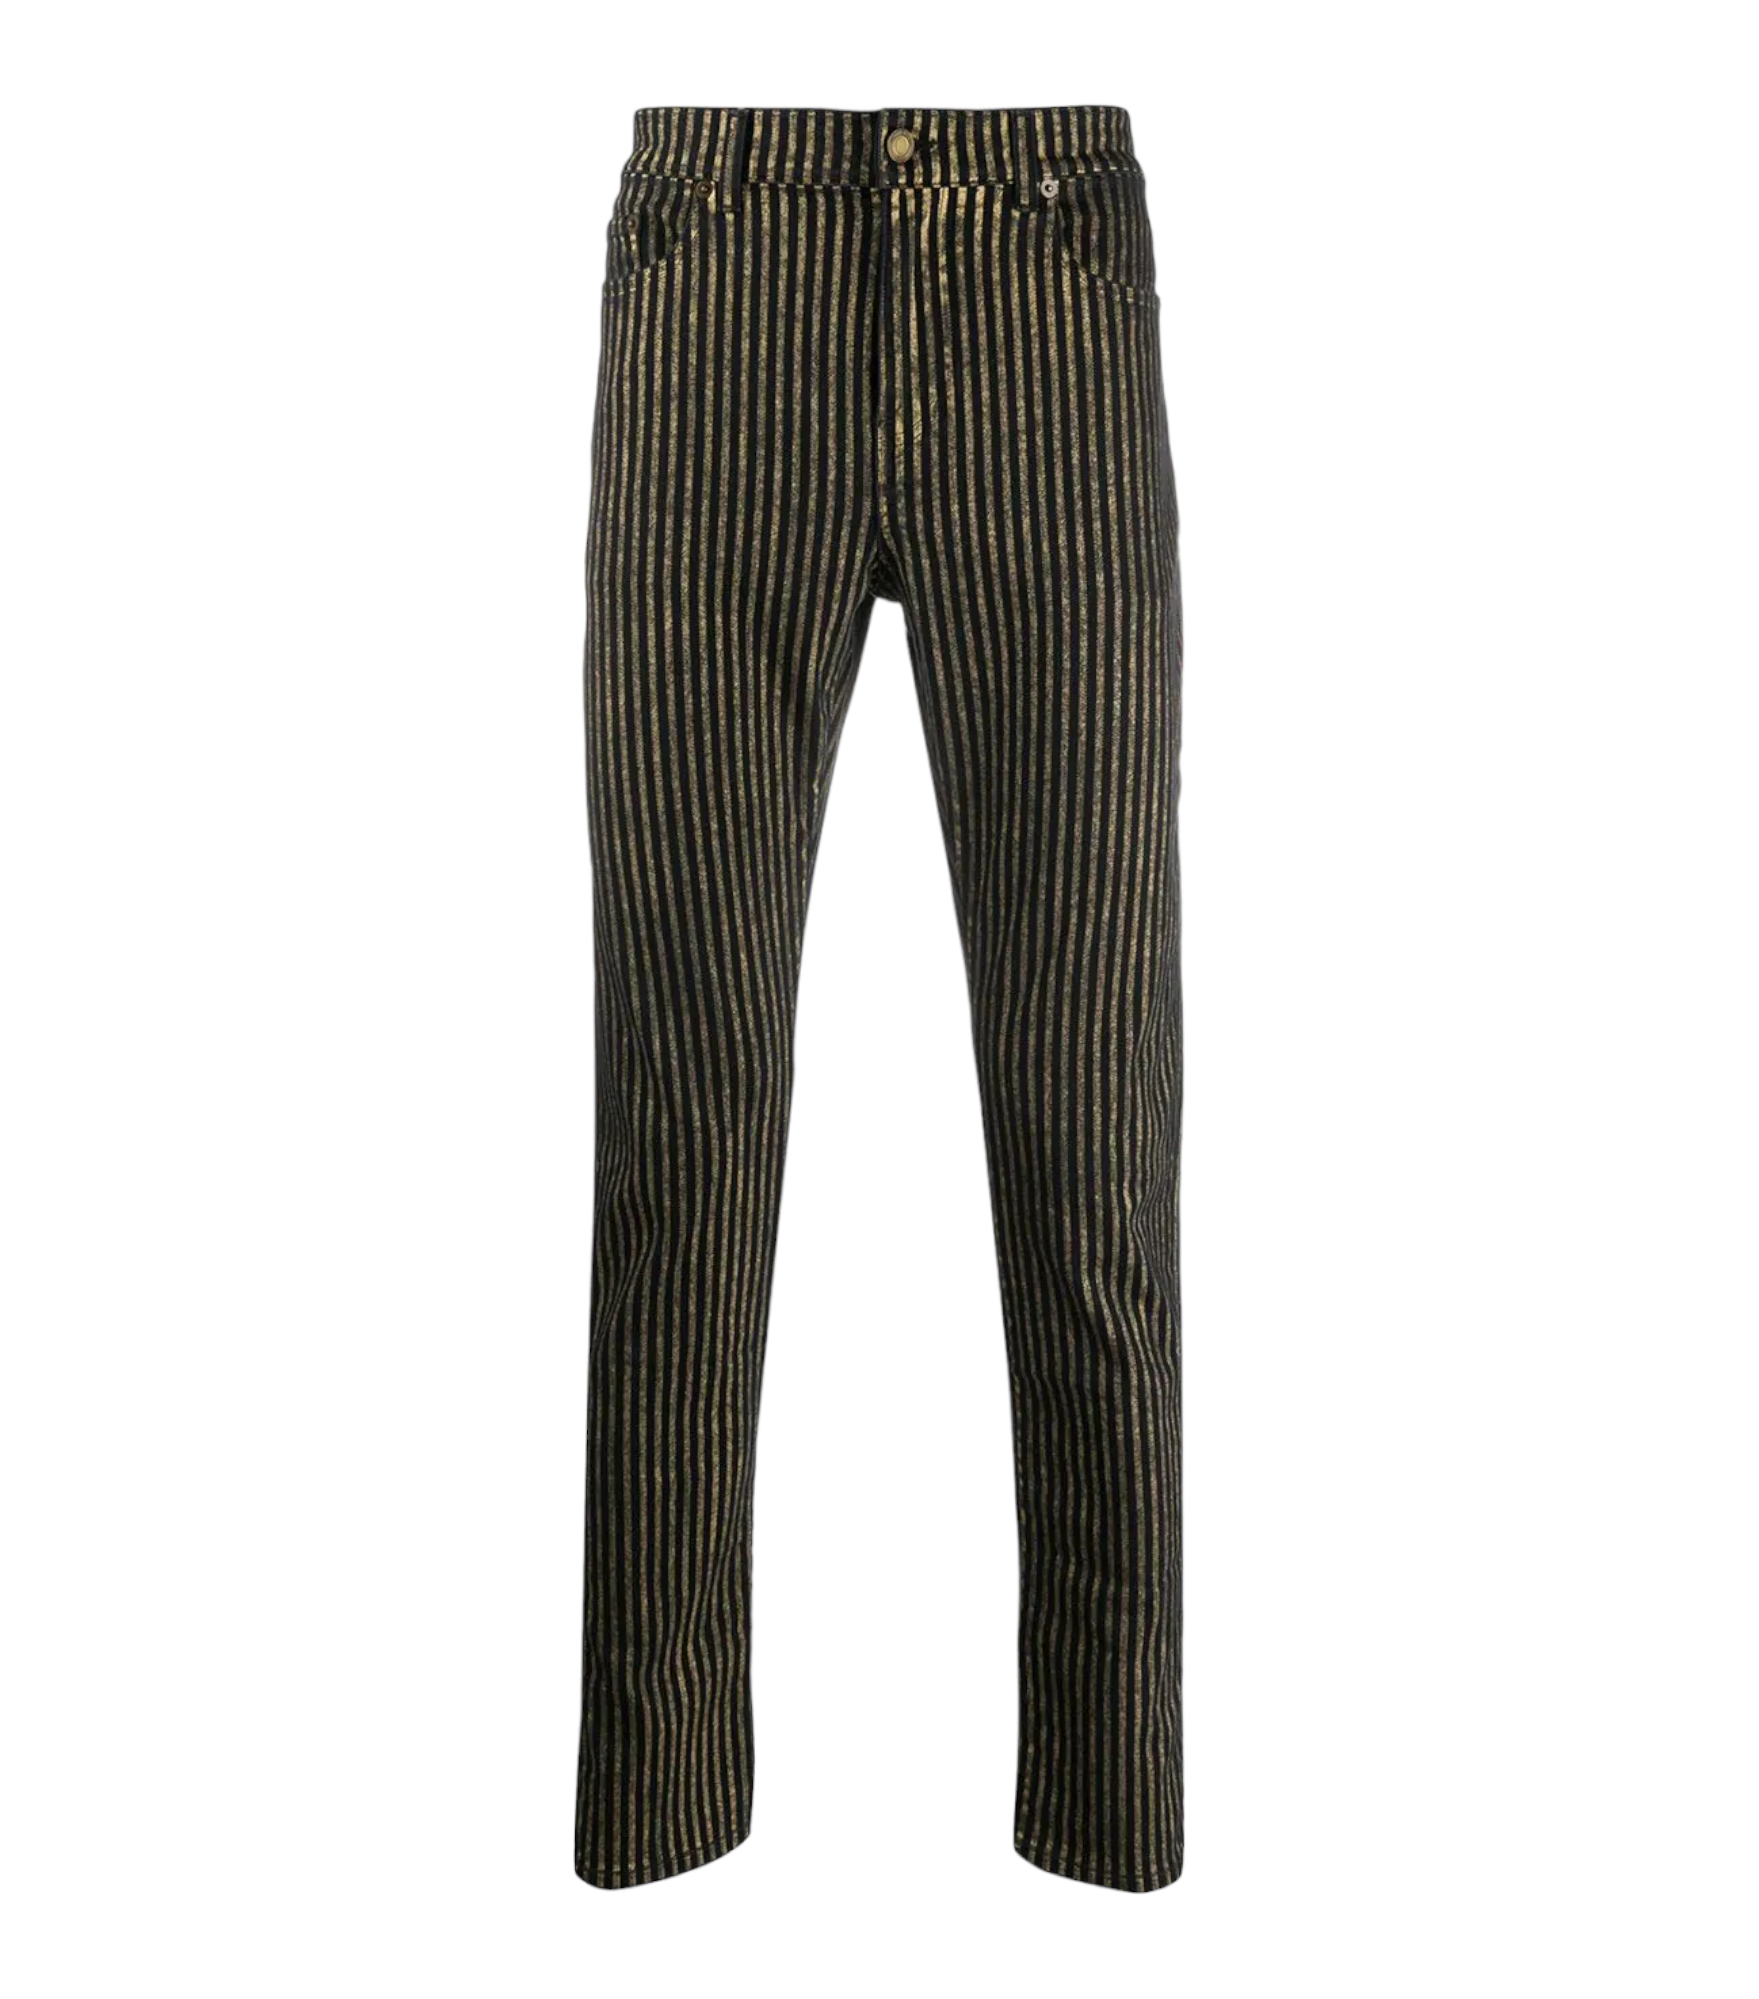 Saint Laurent Mid-Rise Jeans in Black/Gold Striped Stretch Denim